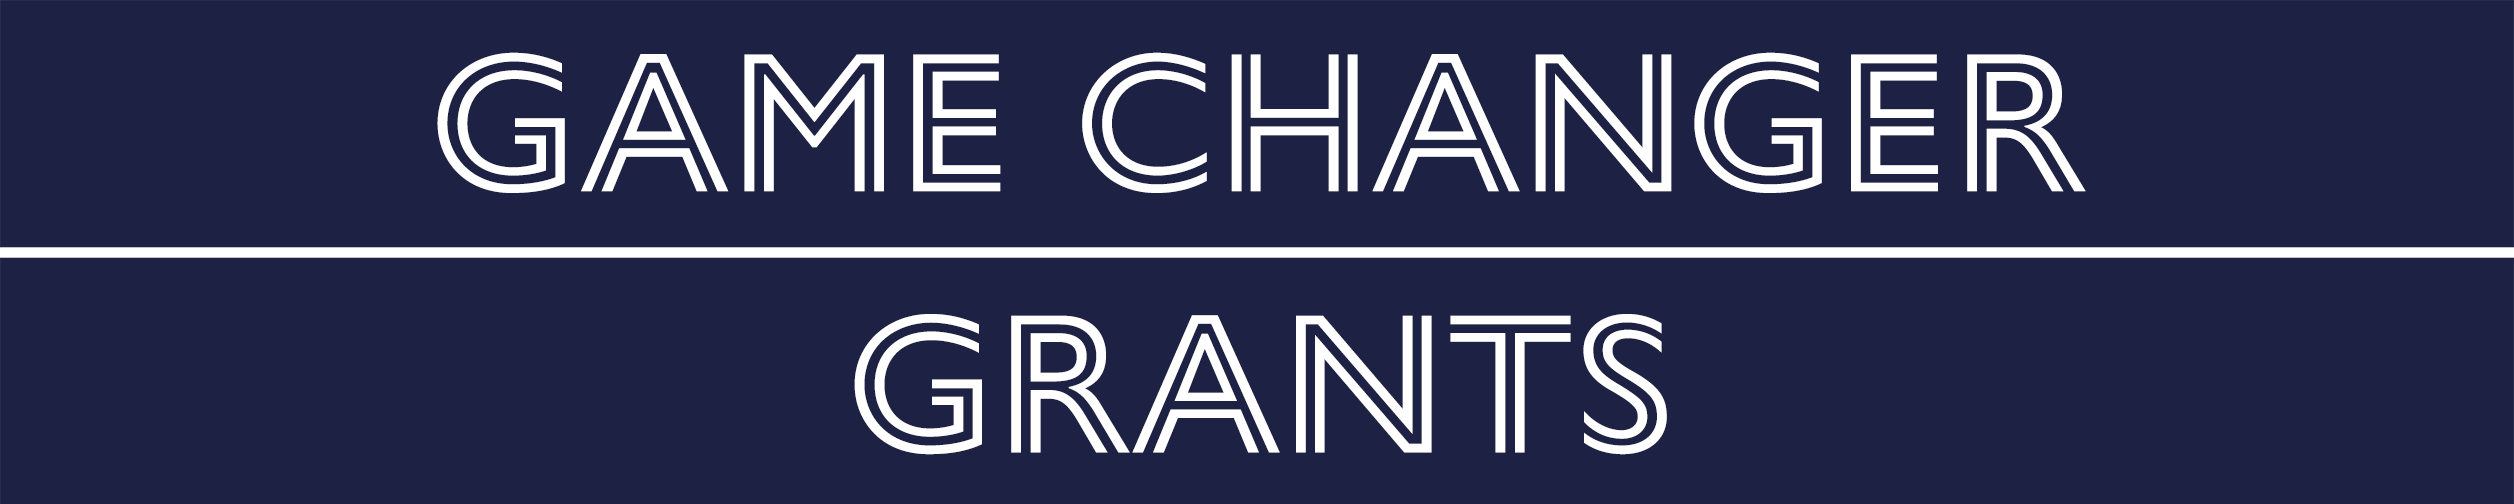 Game Changer Grants